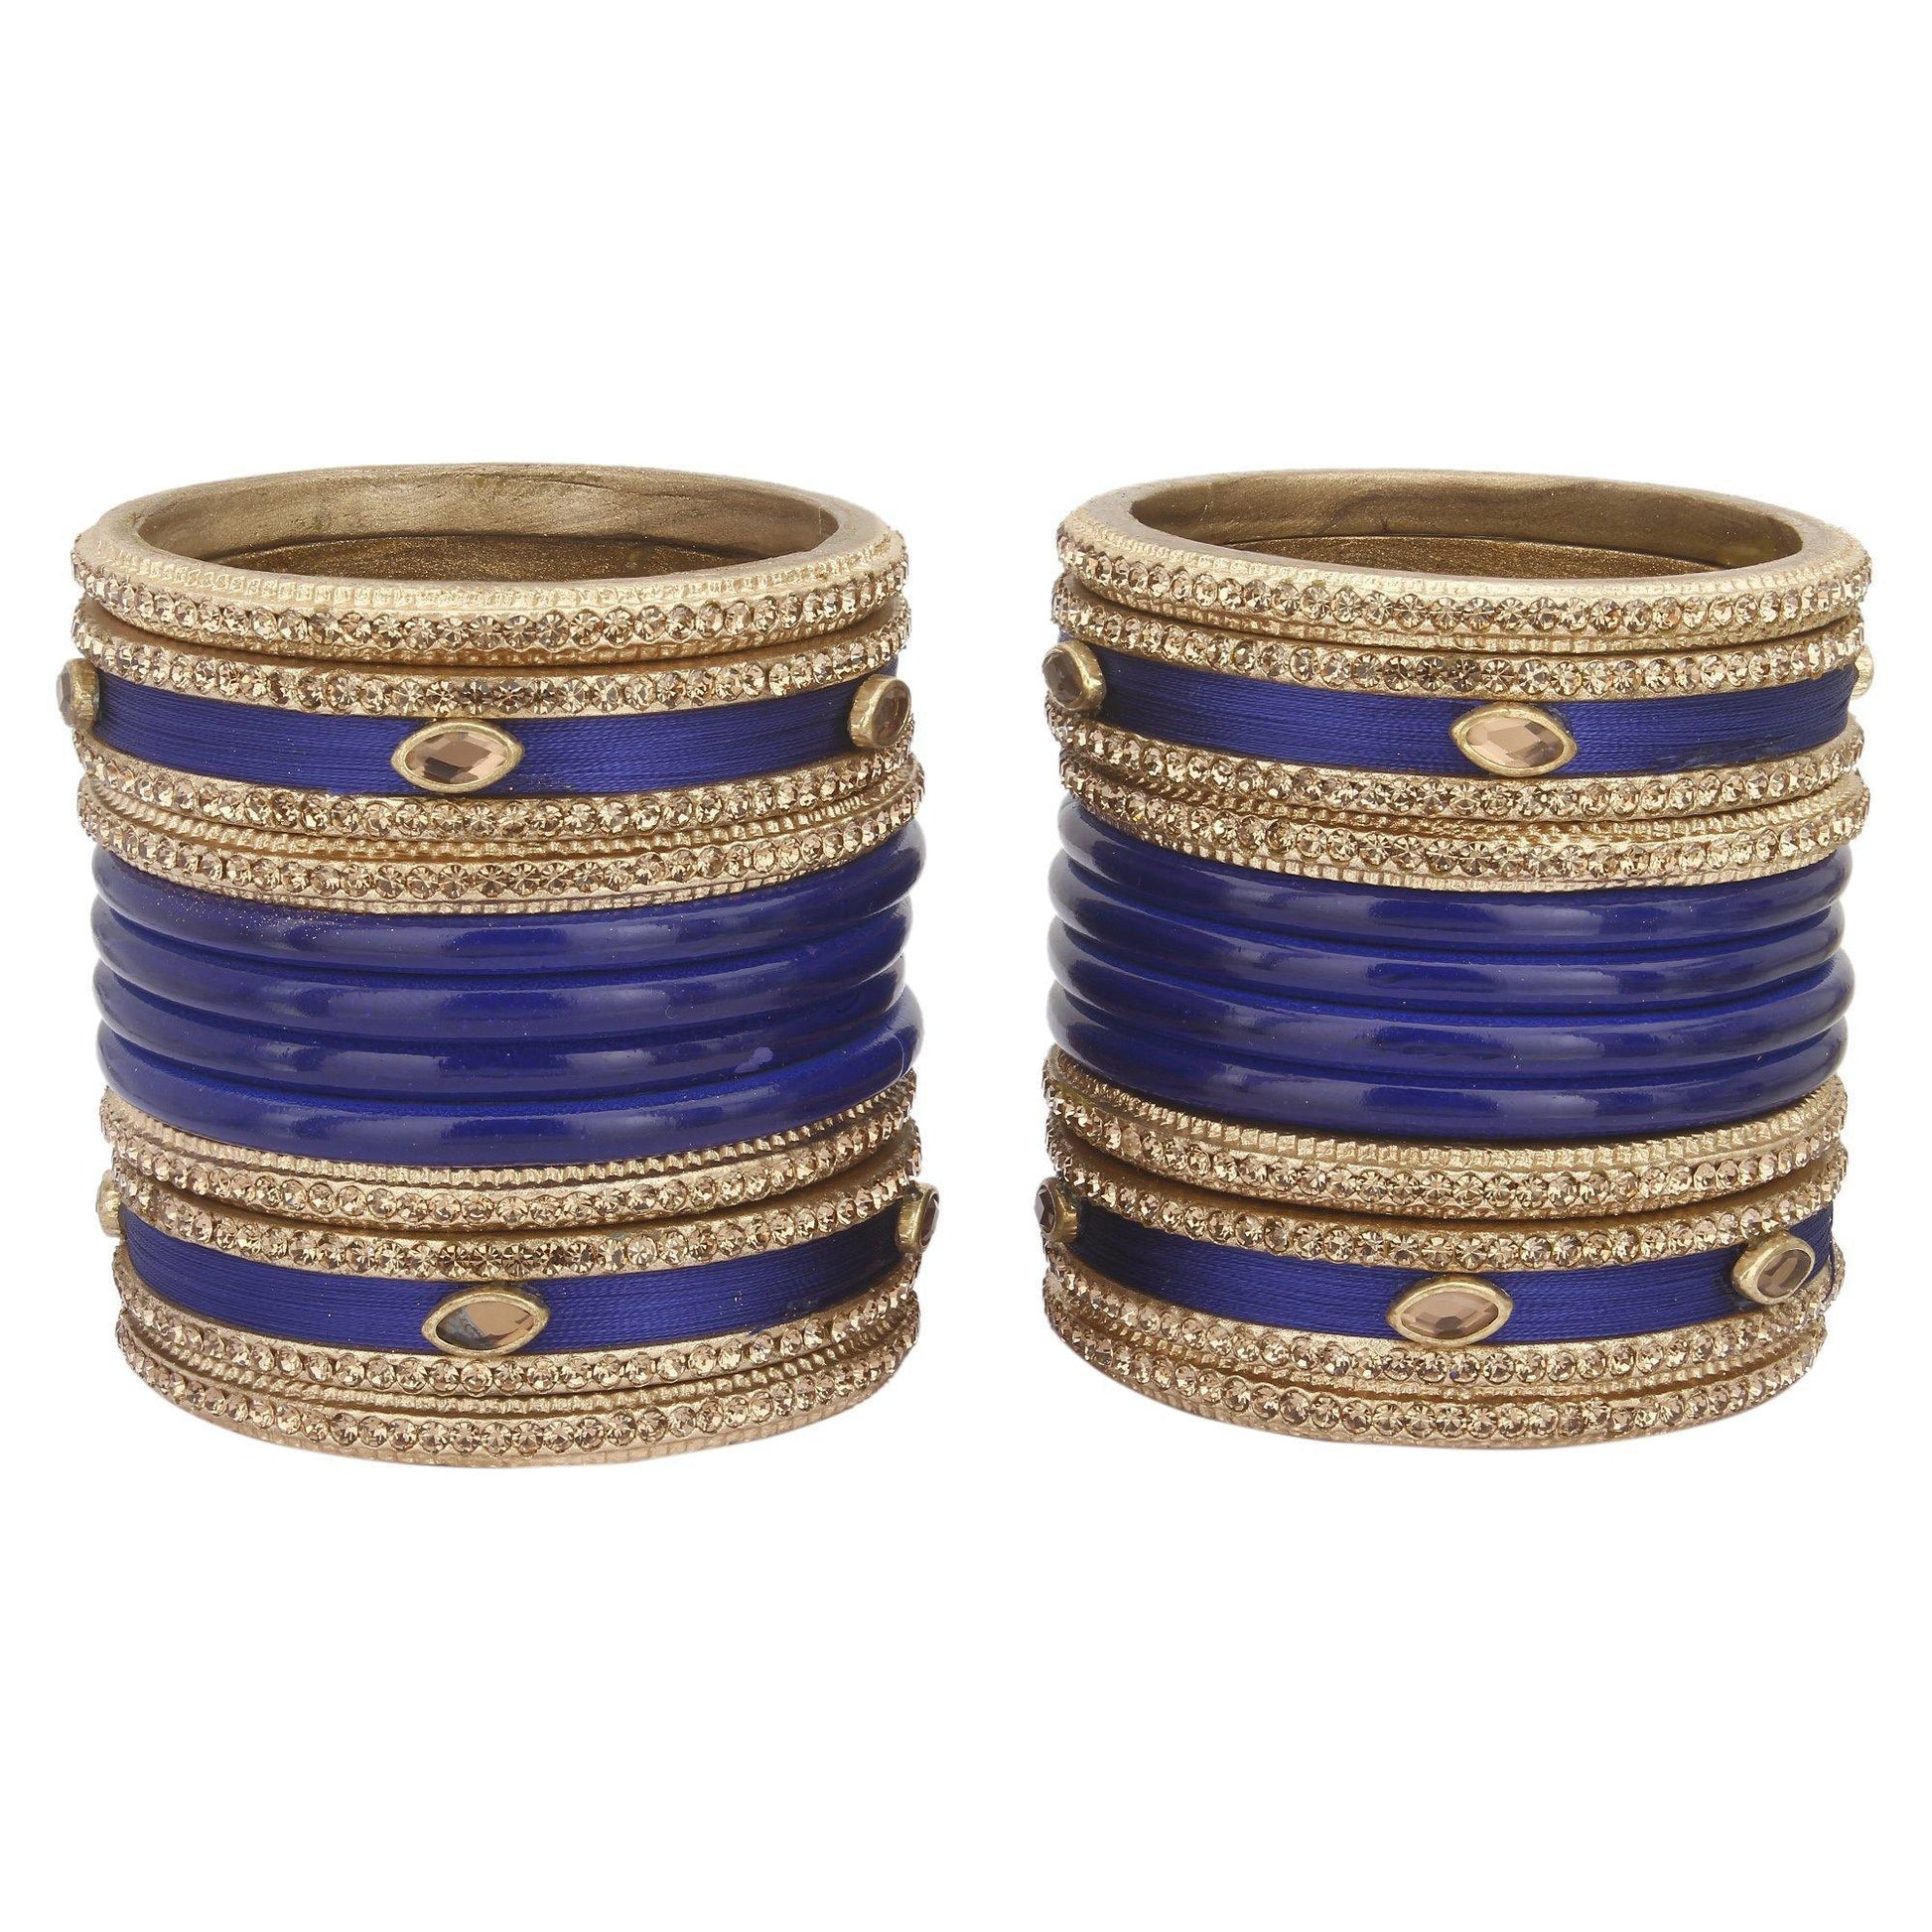 sukriti rajasthani silk thread lac chuda blue bangles bridal jewelry for women - set of 20